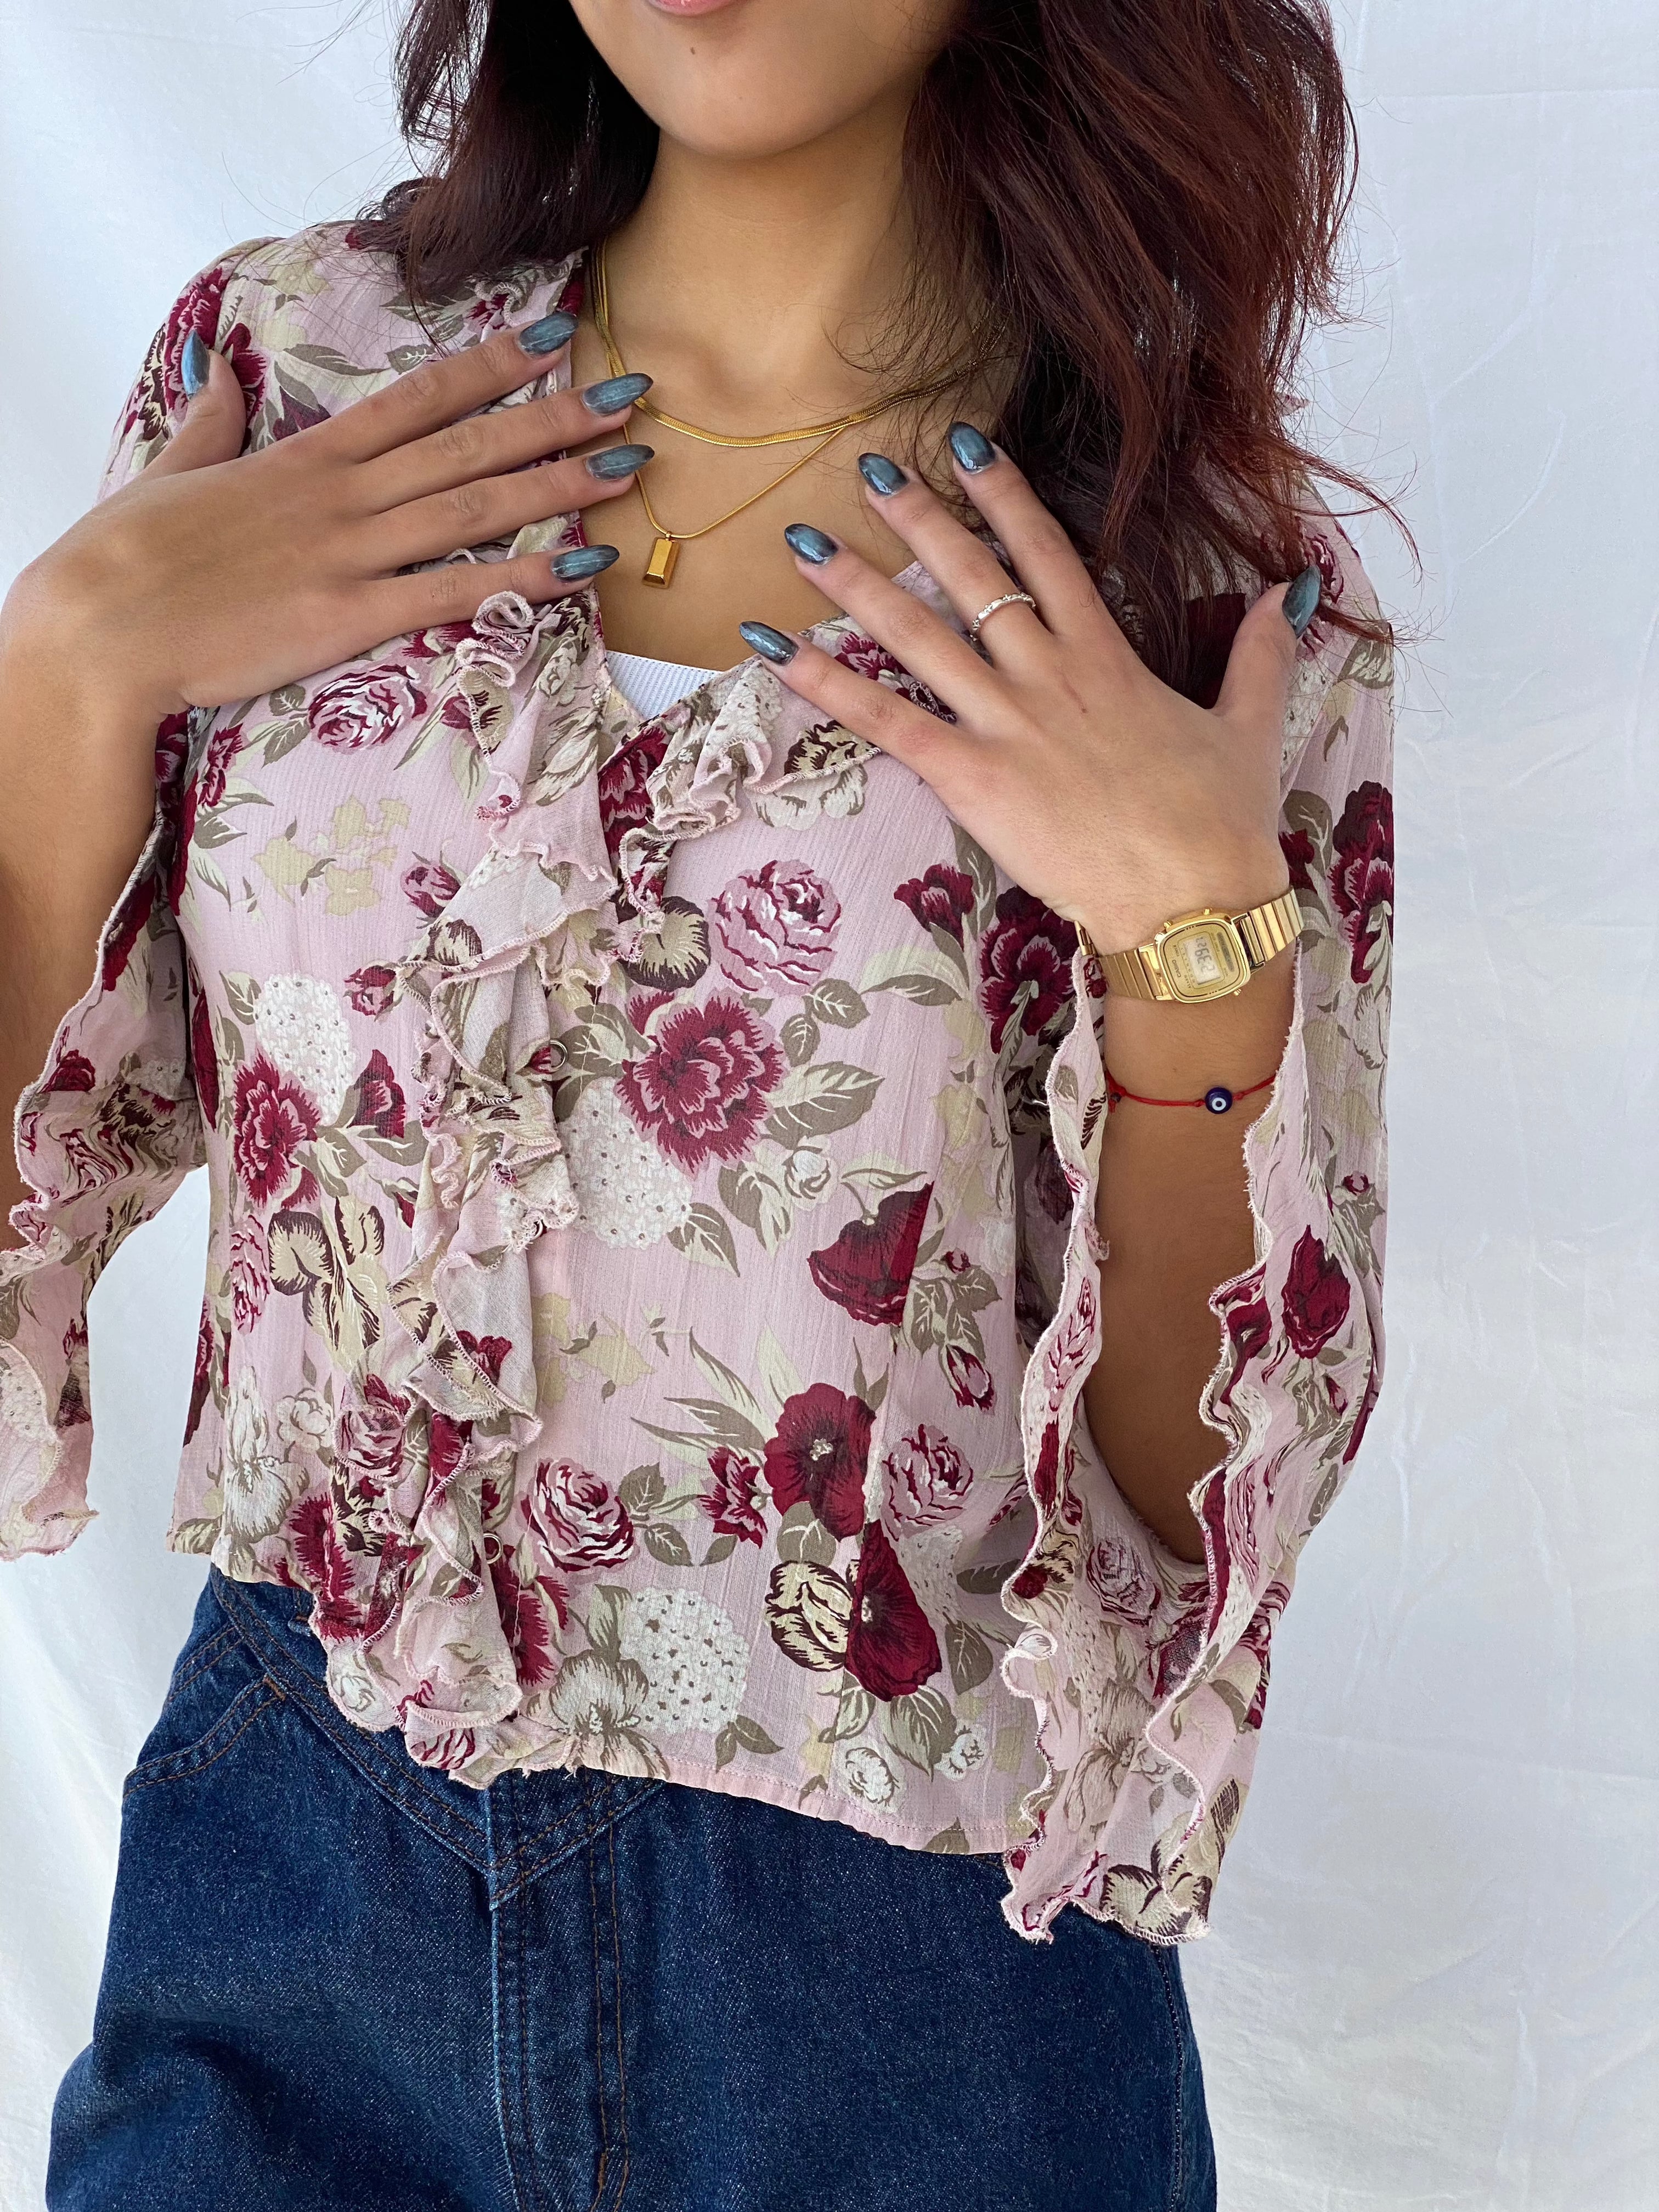 XX BY MEXX Floral Sheer Shirt - Balagan Vintage Sheer Shirt floral, floral mesh, sheer, sheer shirt